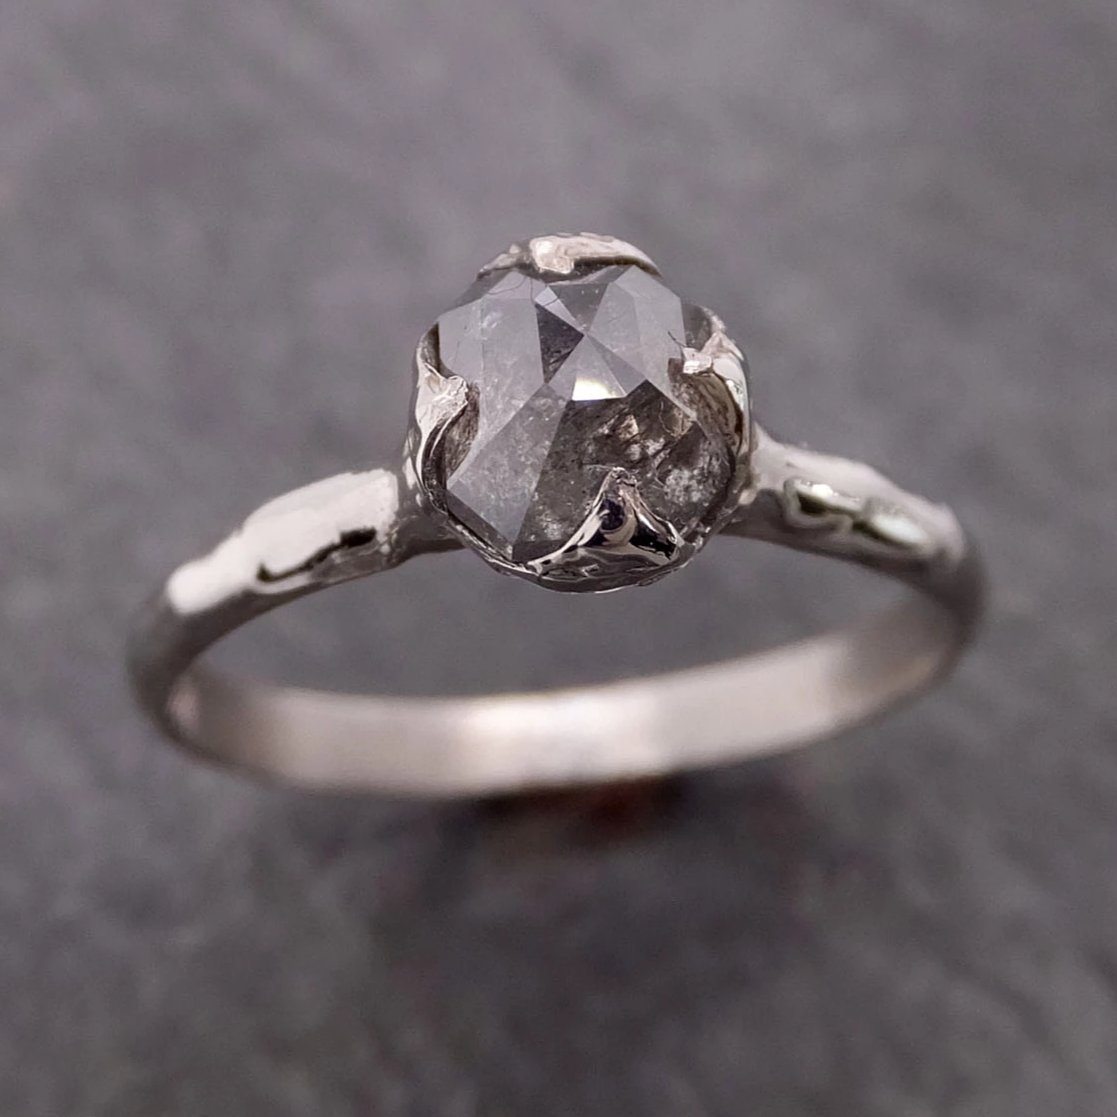 fancy cut salt and pepper diamond solitaire engagement 14k white gold wedding ring byangeline 2073 Alternative Engagement